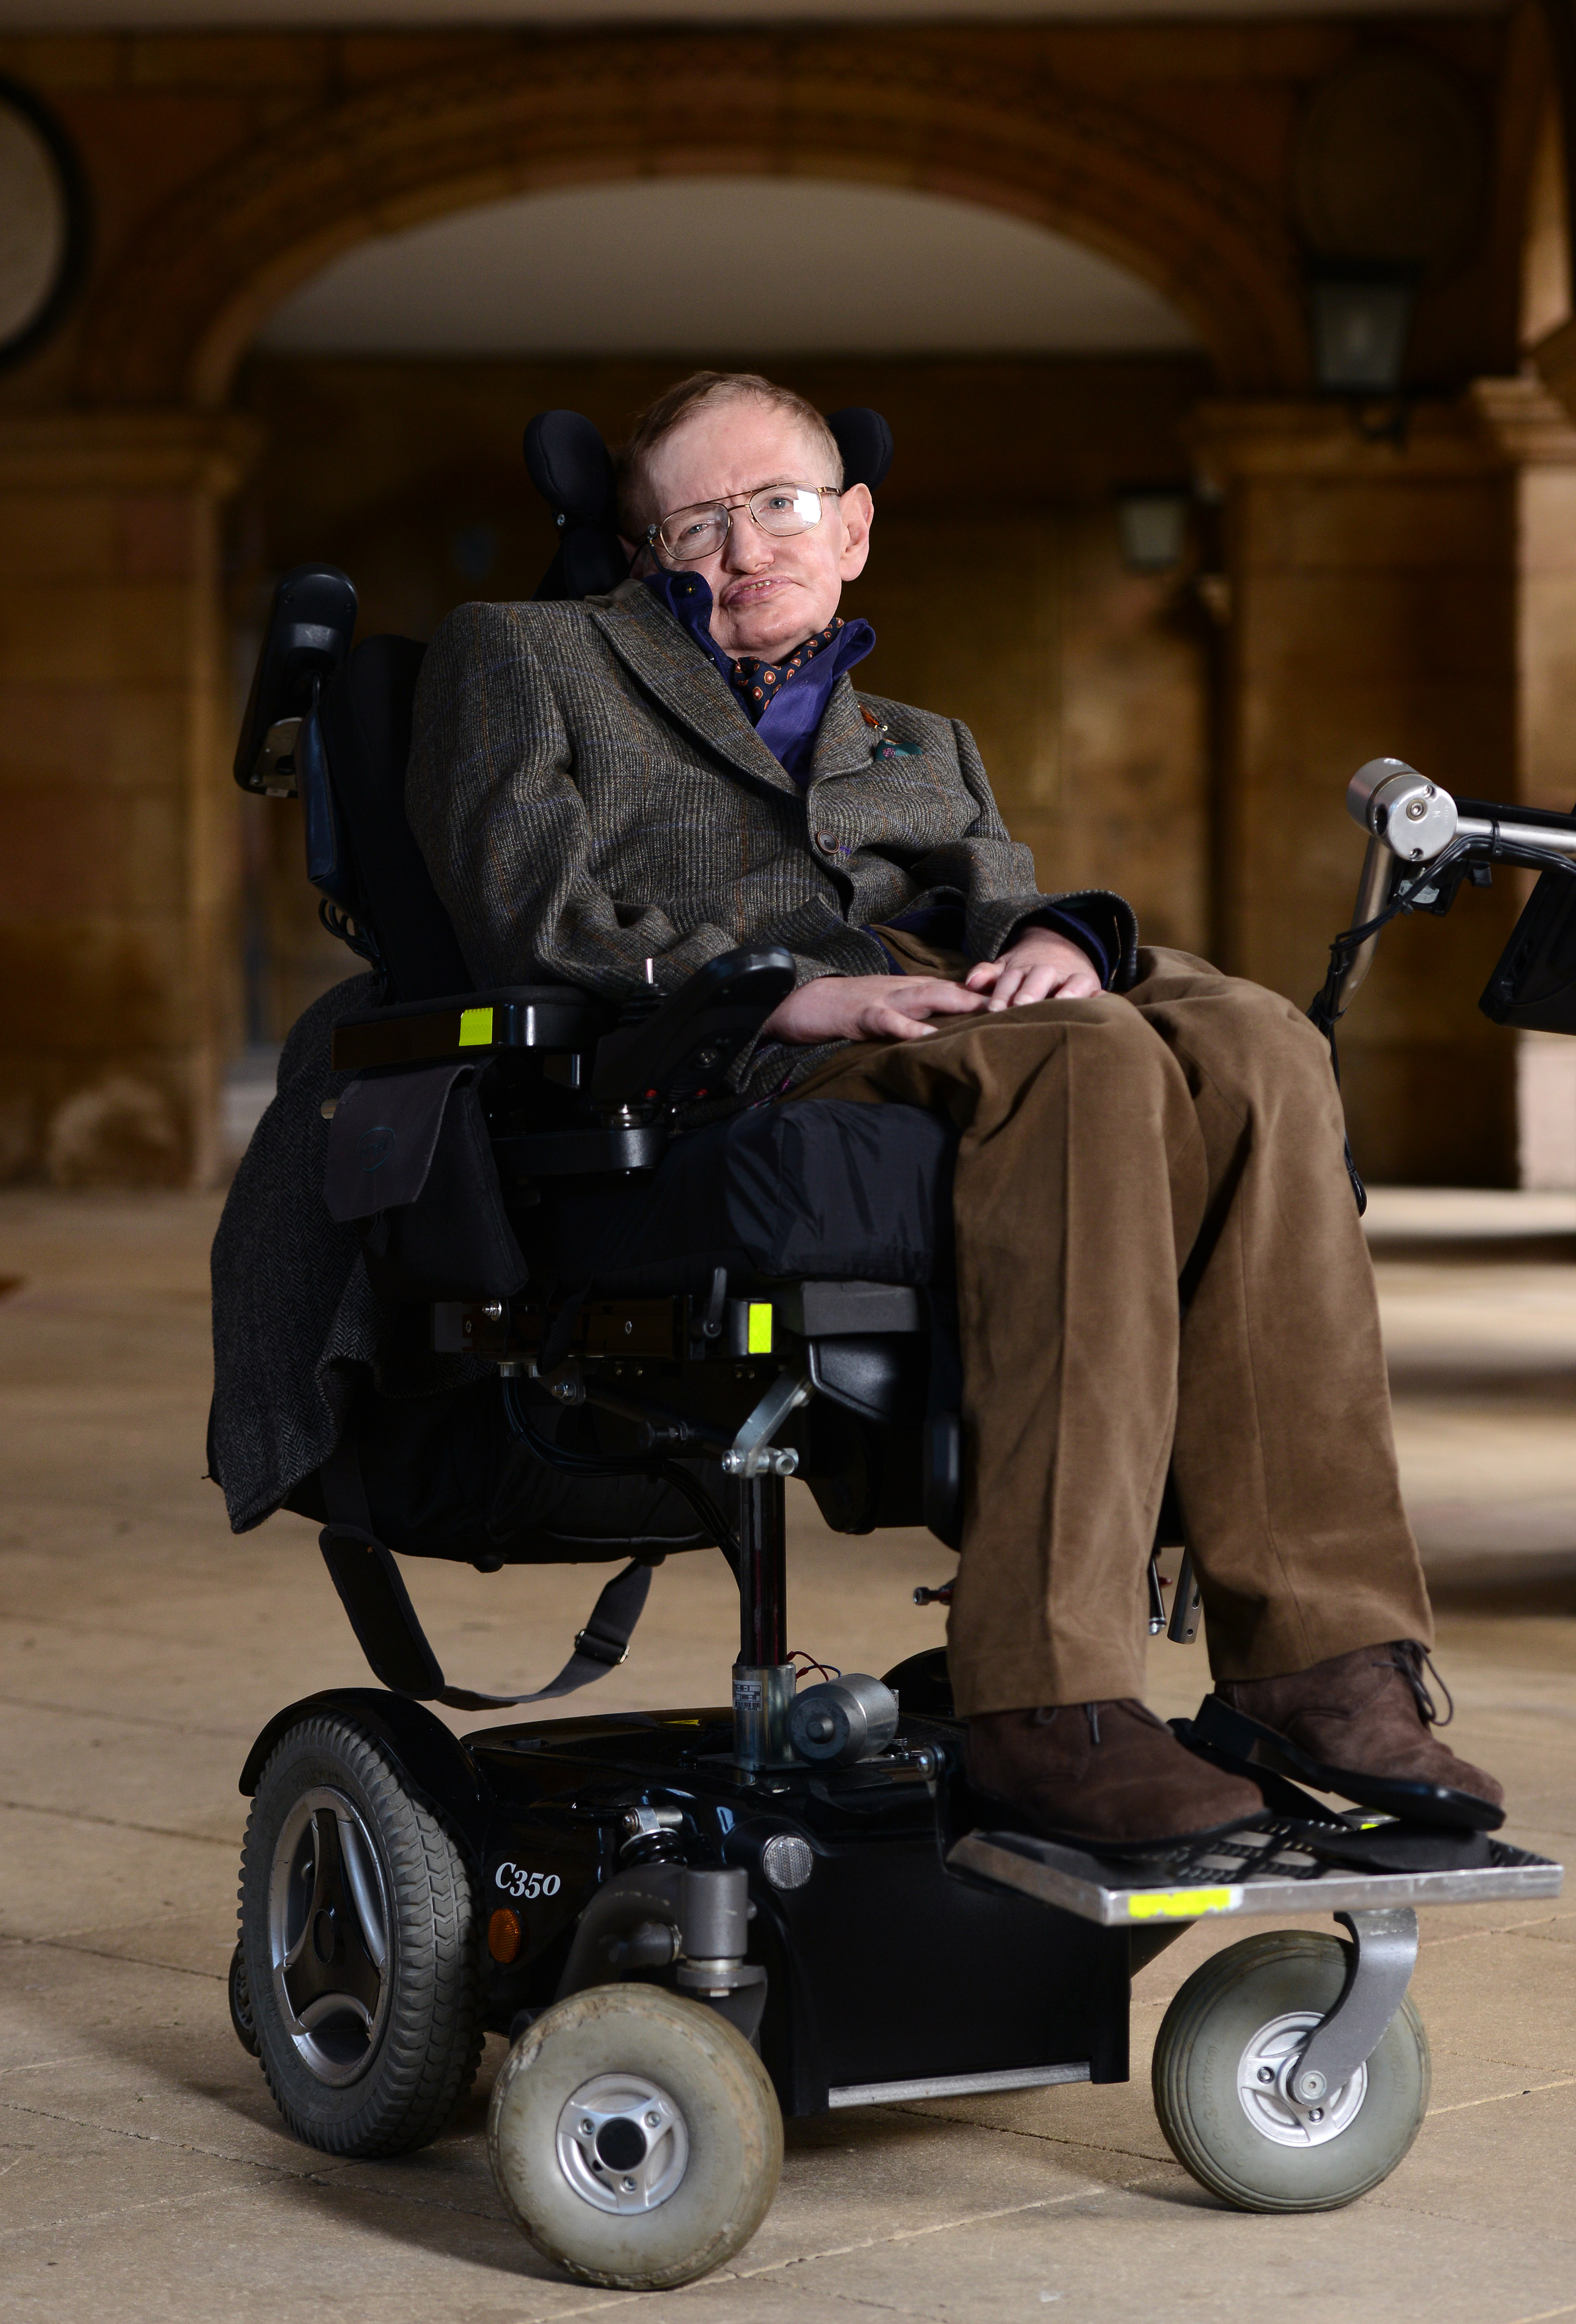 Cambridge Film Festival: "Hawking" - Opening Night Premiere